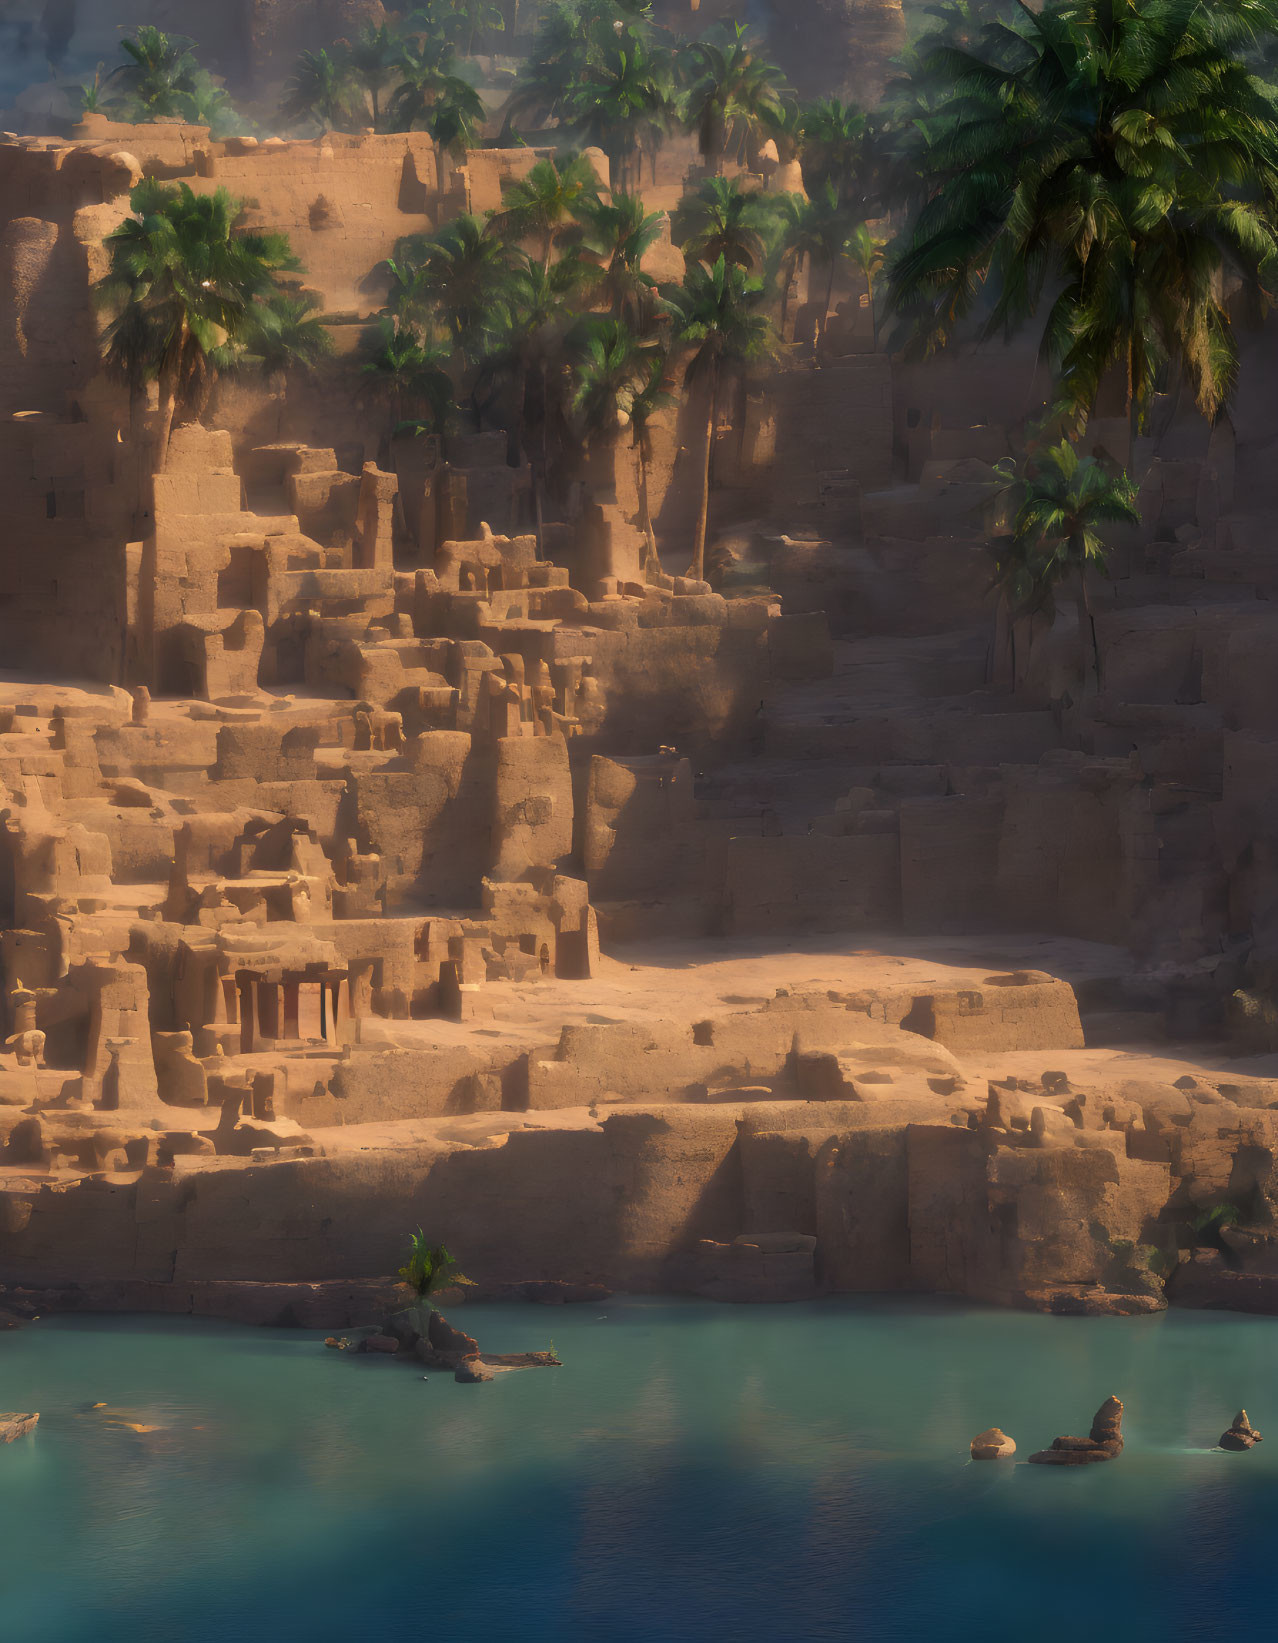 our beloved ancient civilization of egypt